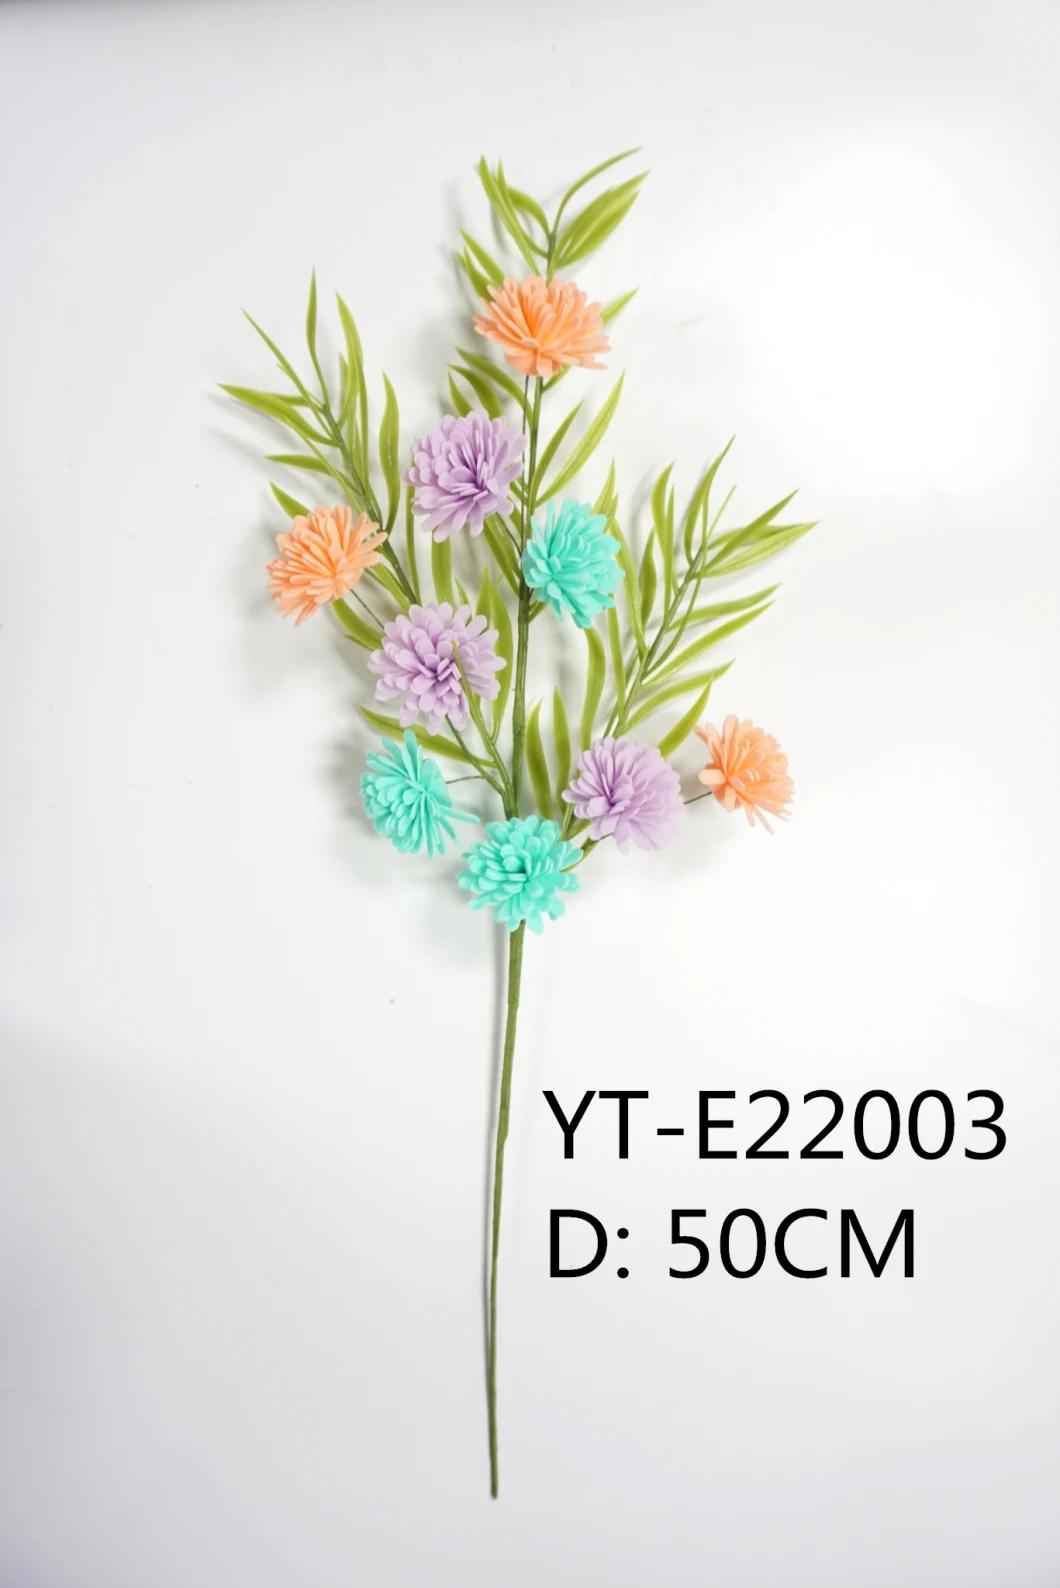 Yt-E22019 Colorful Eggs for Easter Pick Decor